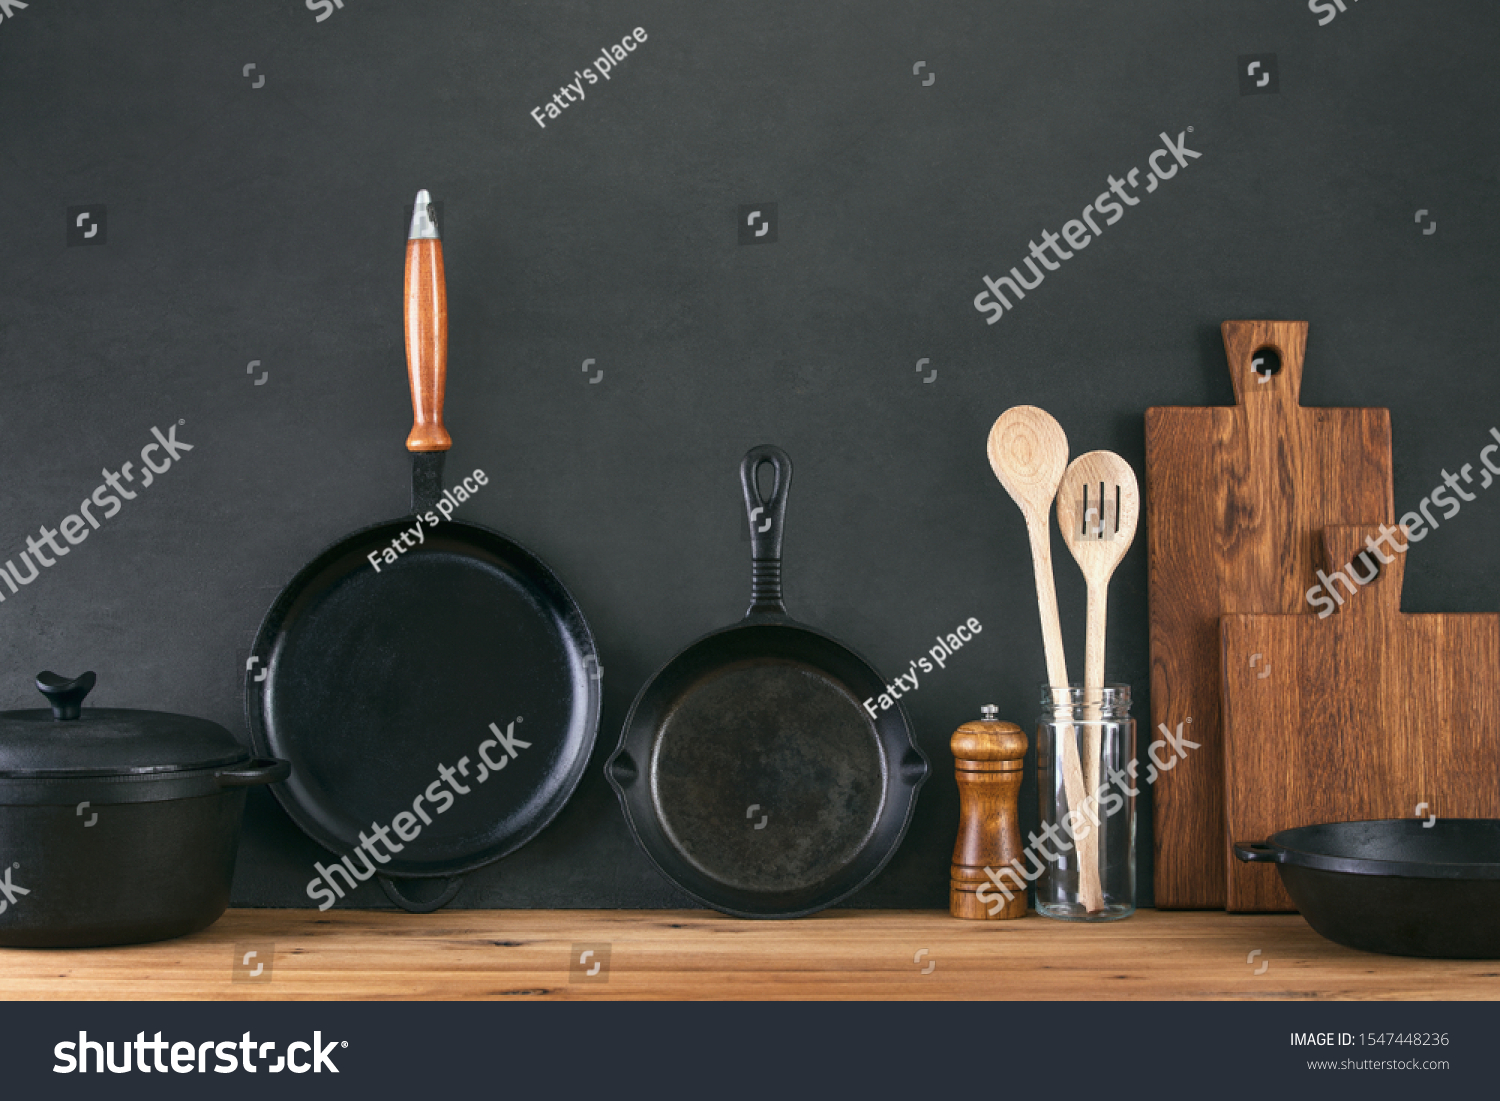 Kitchen utensils dark background with cast iron black kitchenware, front view of home kitchen table top #1547448236